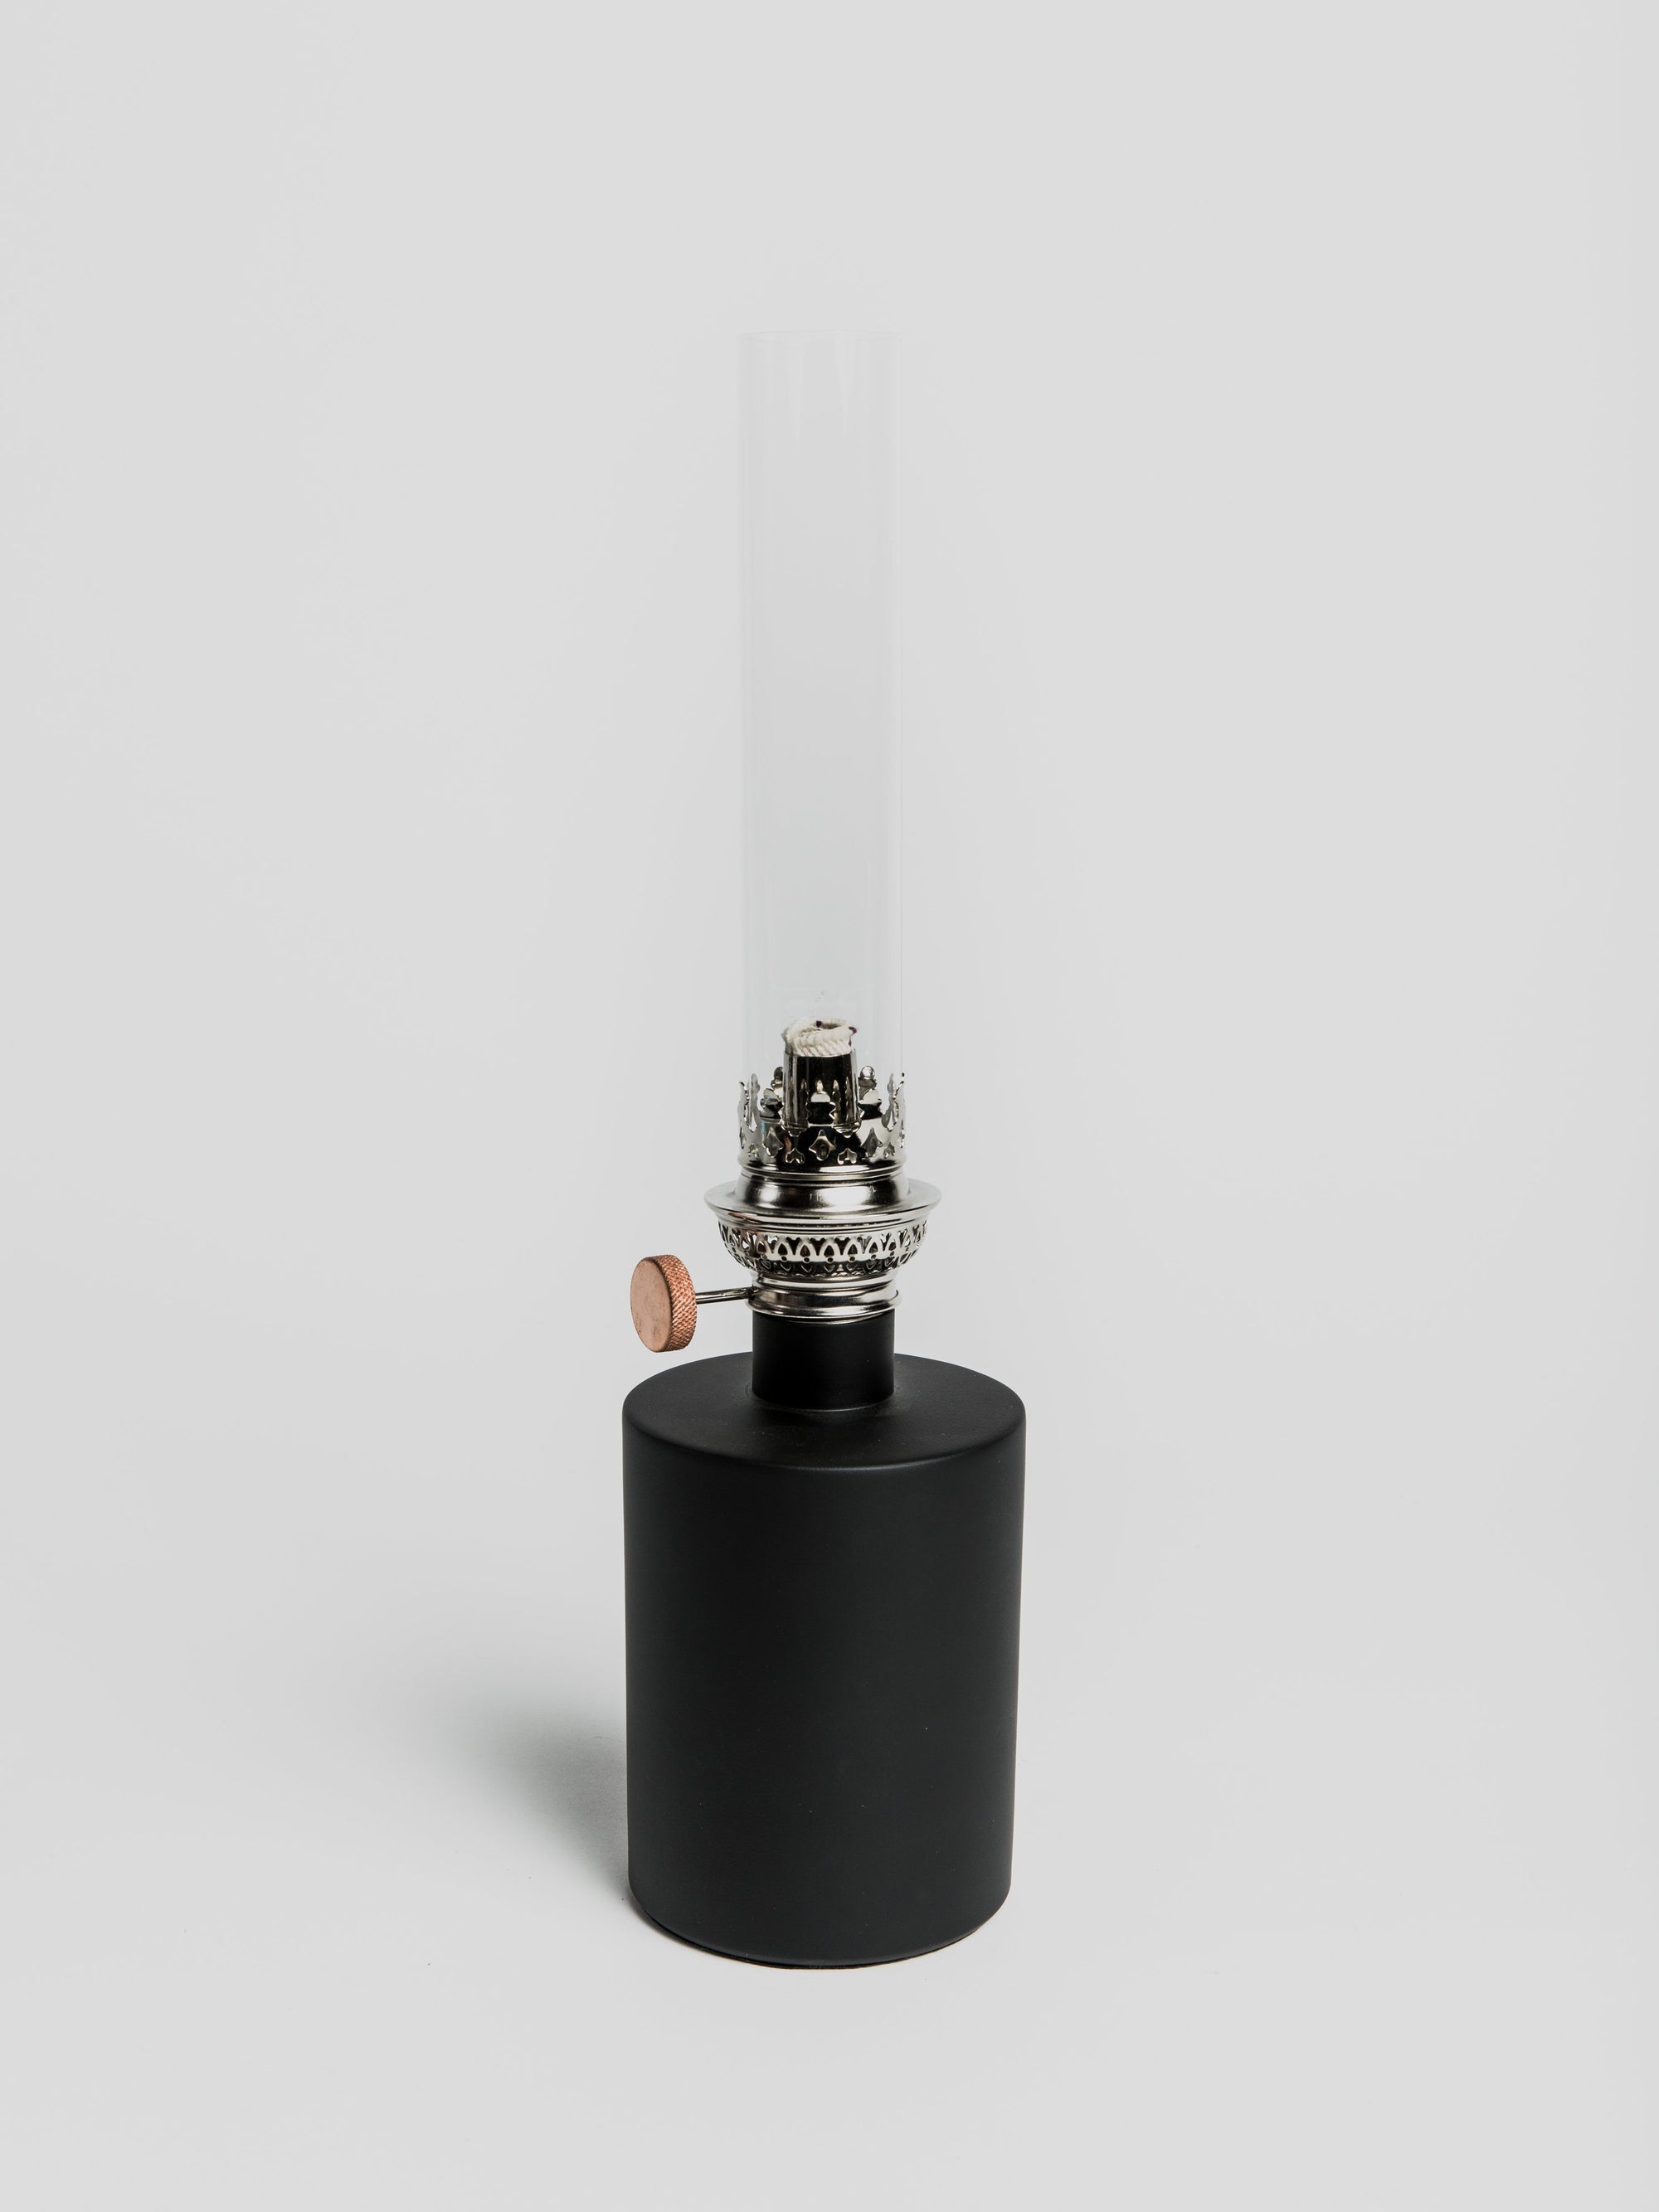 Patina Oil Lamp - Black Oil lamp Klong 